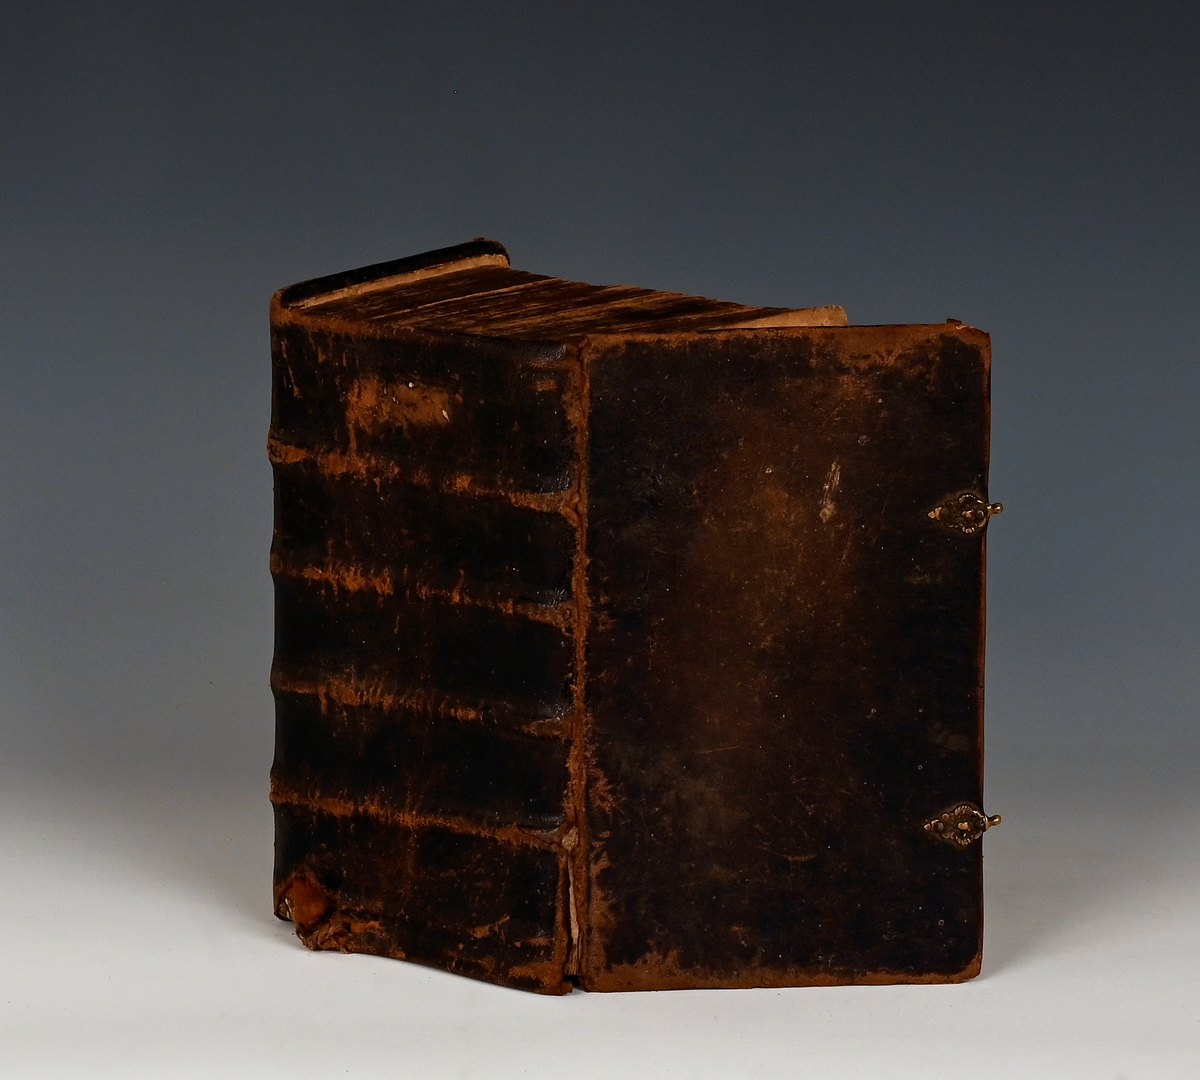 Prot: Bibel. 1.ste. titelblad mangler. Det nye testamentes titelblad bærer aarstal 1699.